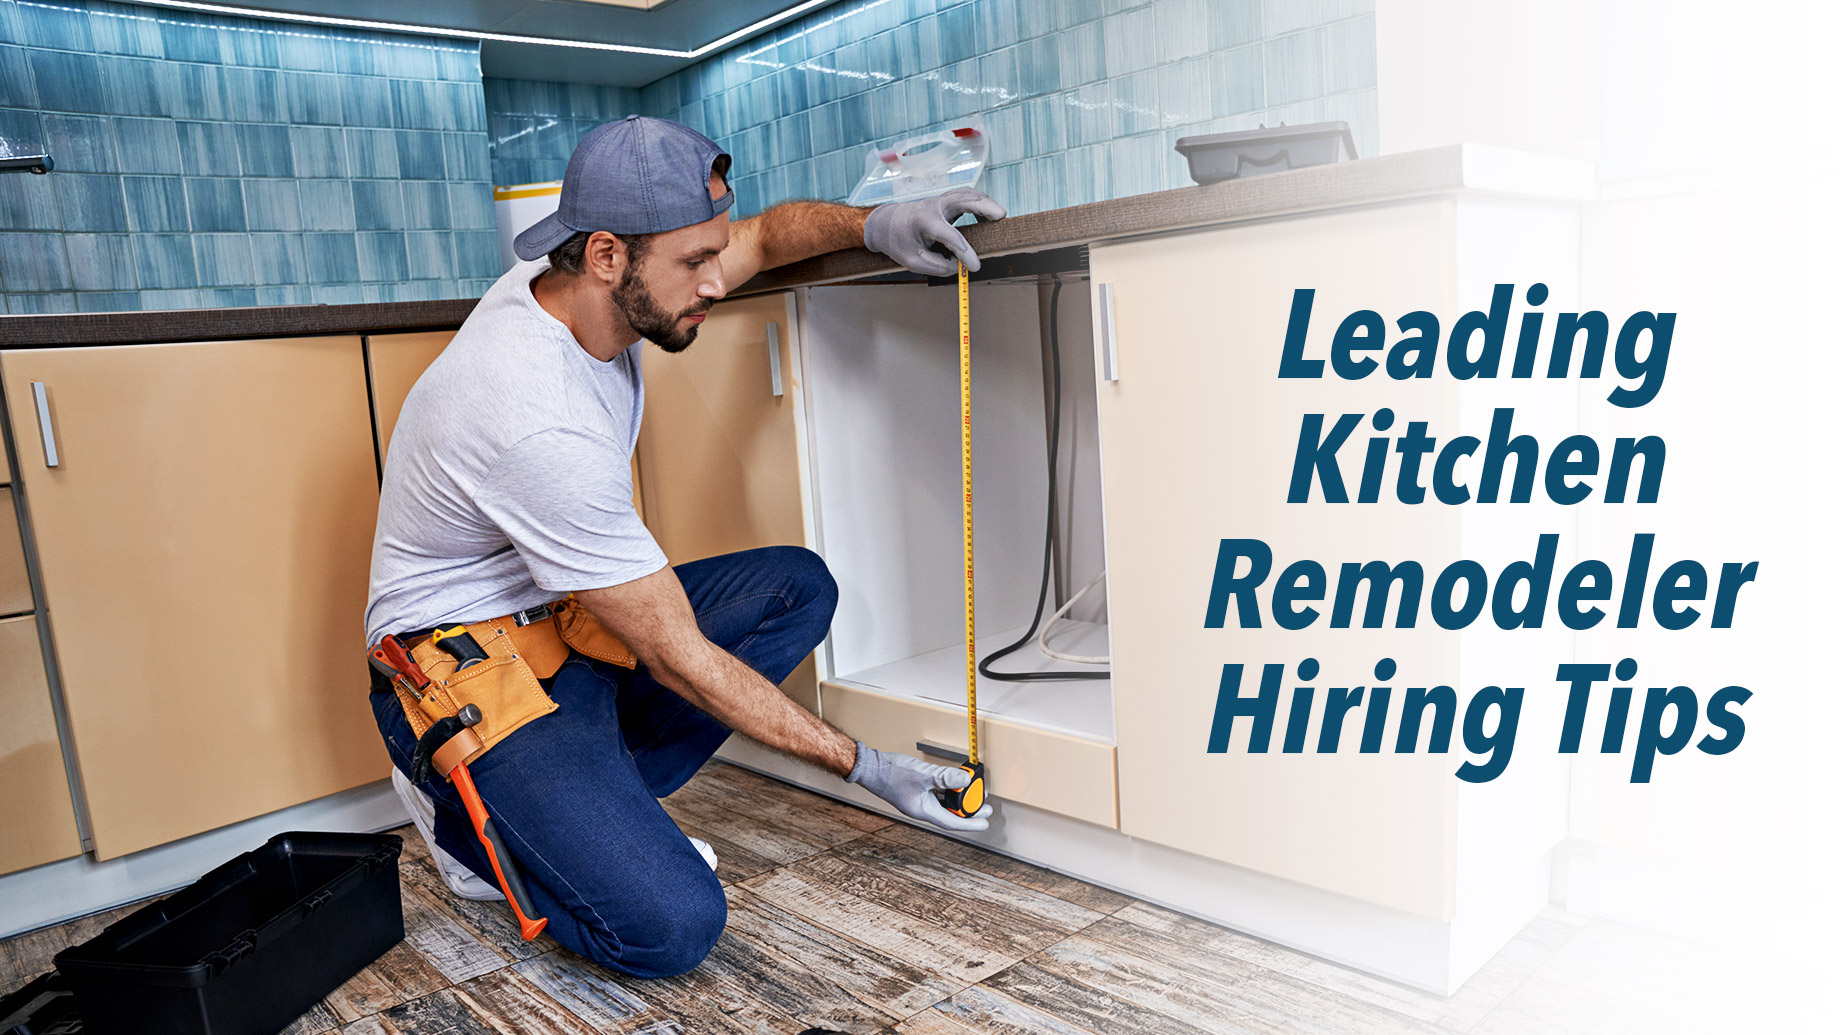 Leading Kitchen Remodeler Hiring Tips